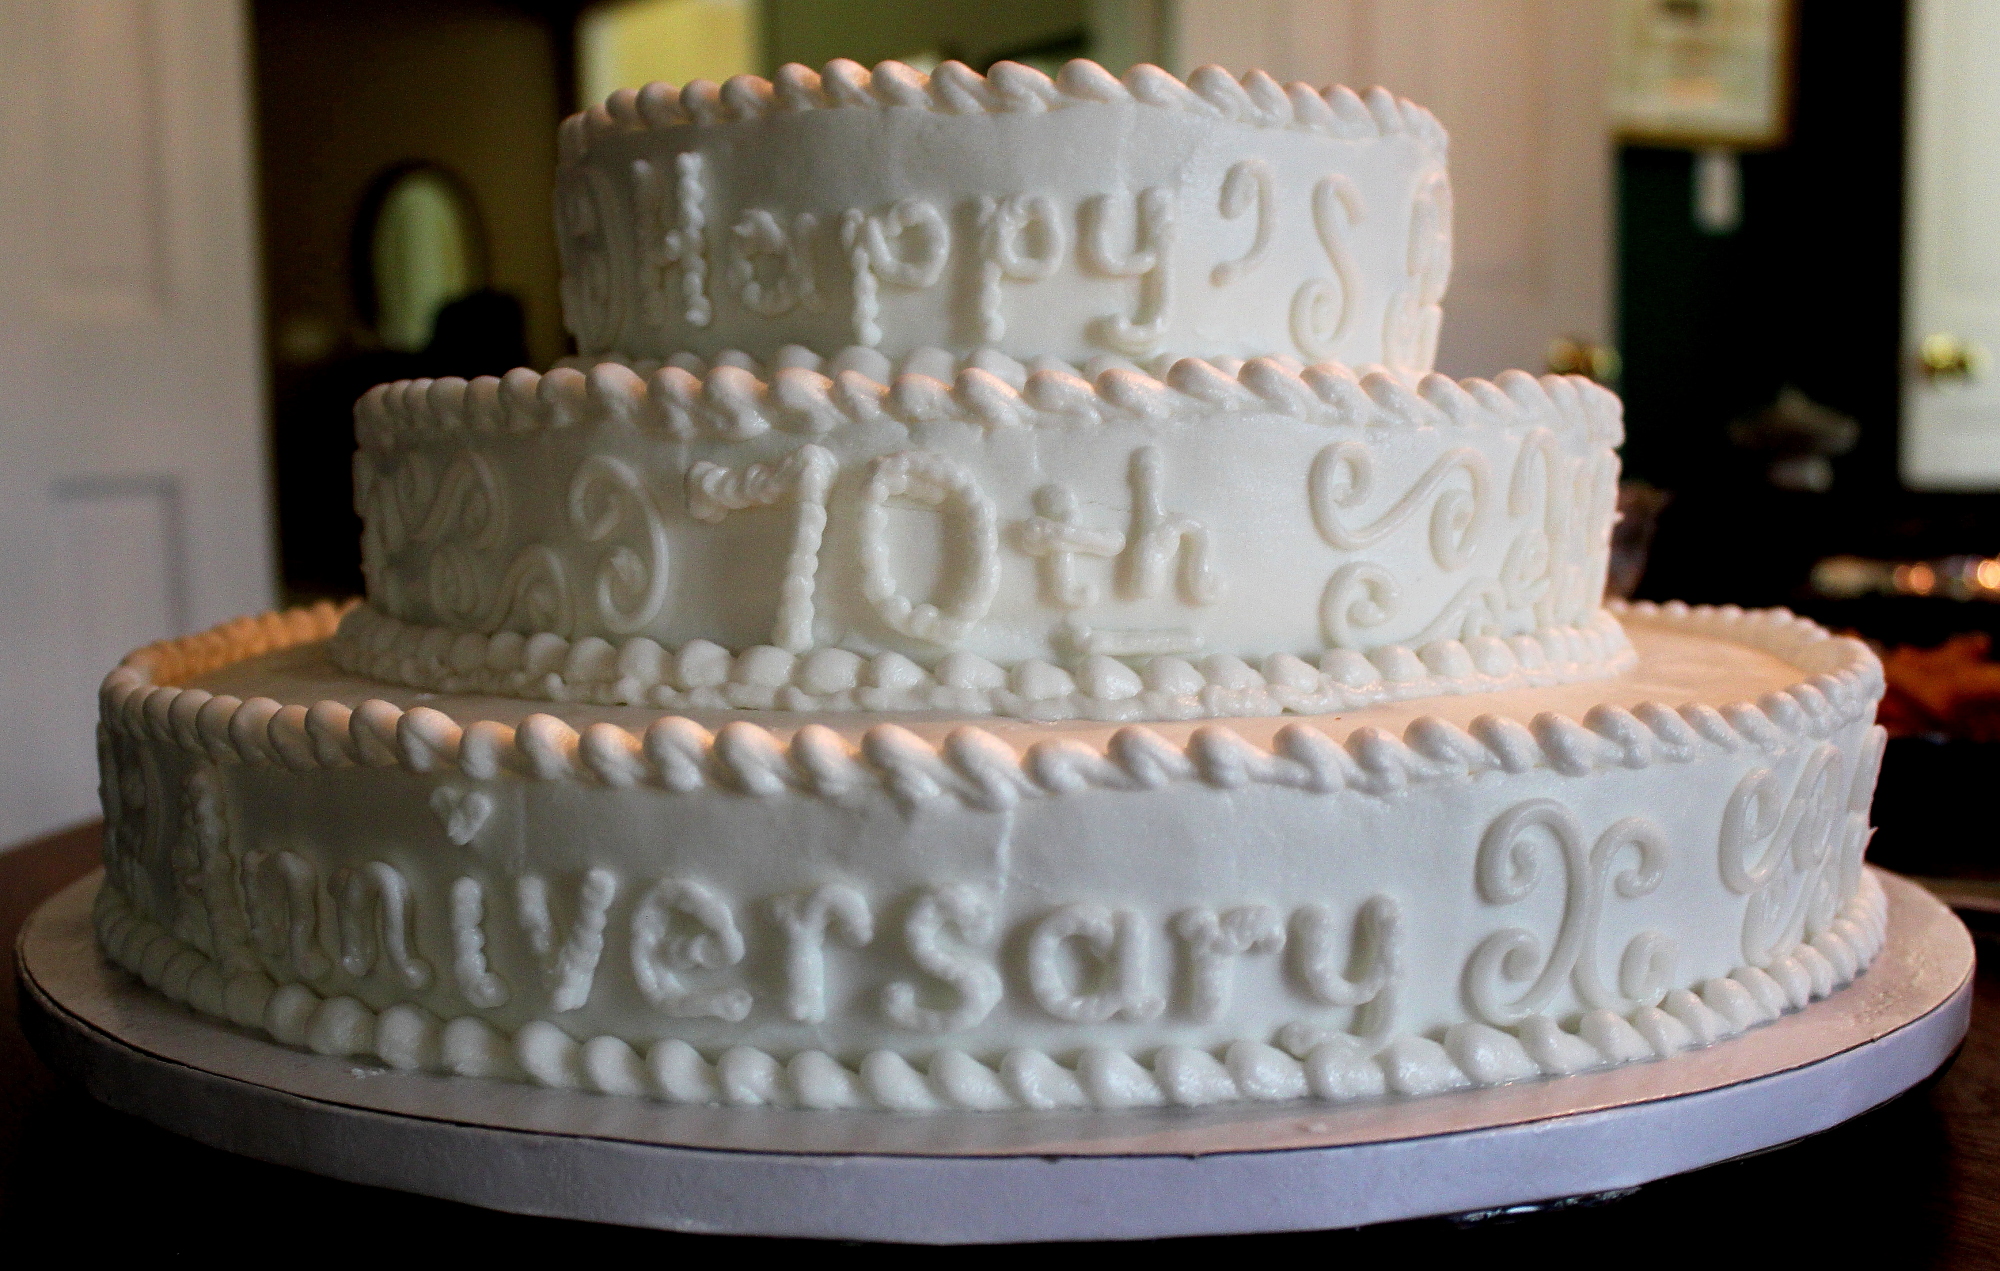 70th Wedding Anniversary Cake